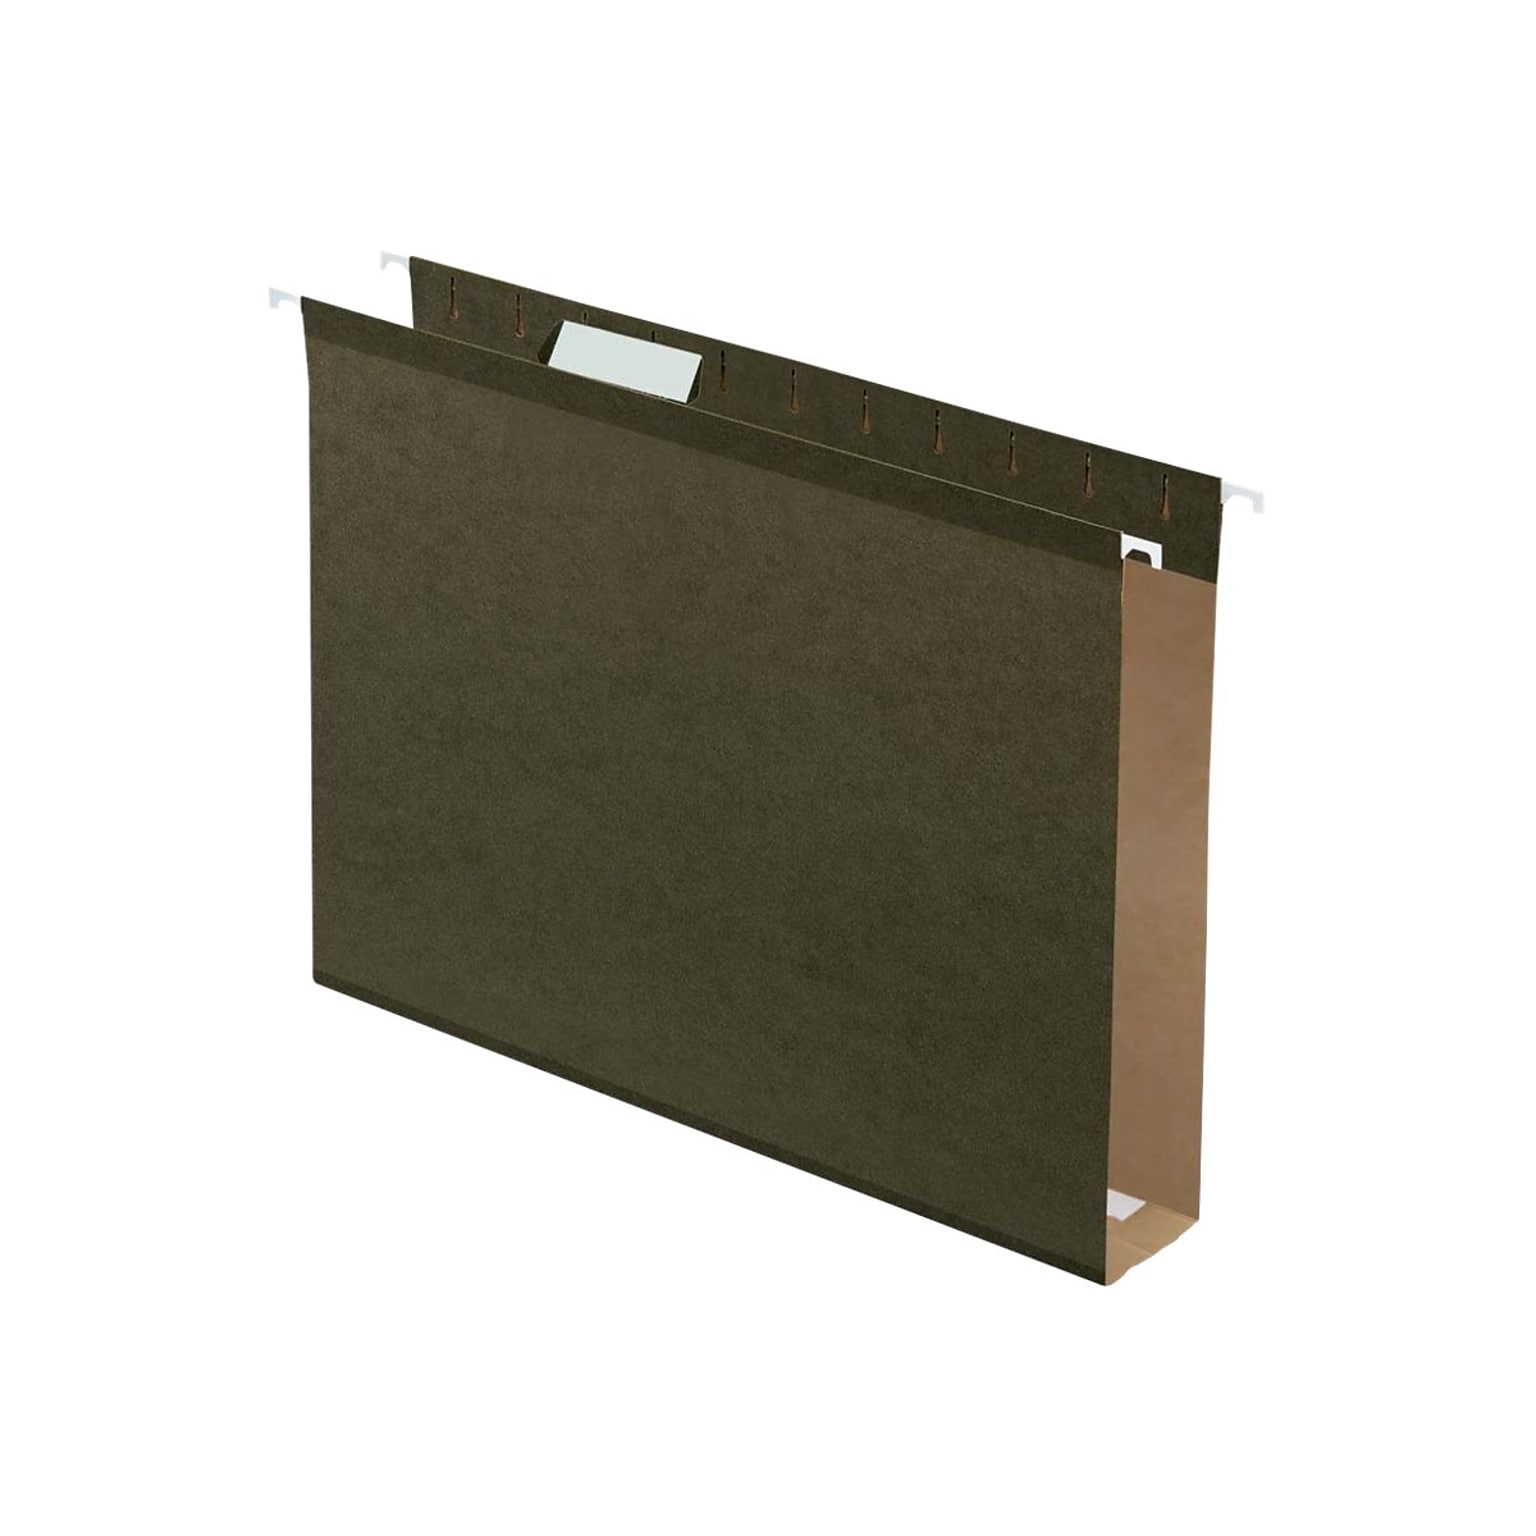 Pendaflex Reinforced Recycled Hanging File Folders, 1/5 Cut Tab, Letter Size, Standard Green, 25/Box (PFX 5142x2)